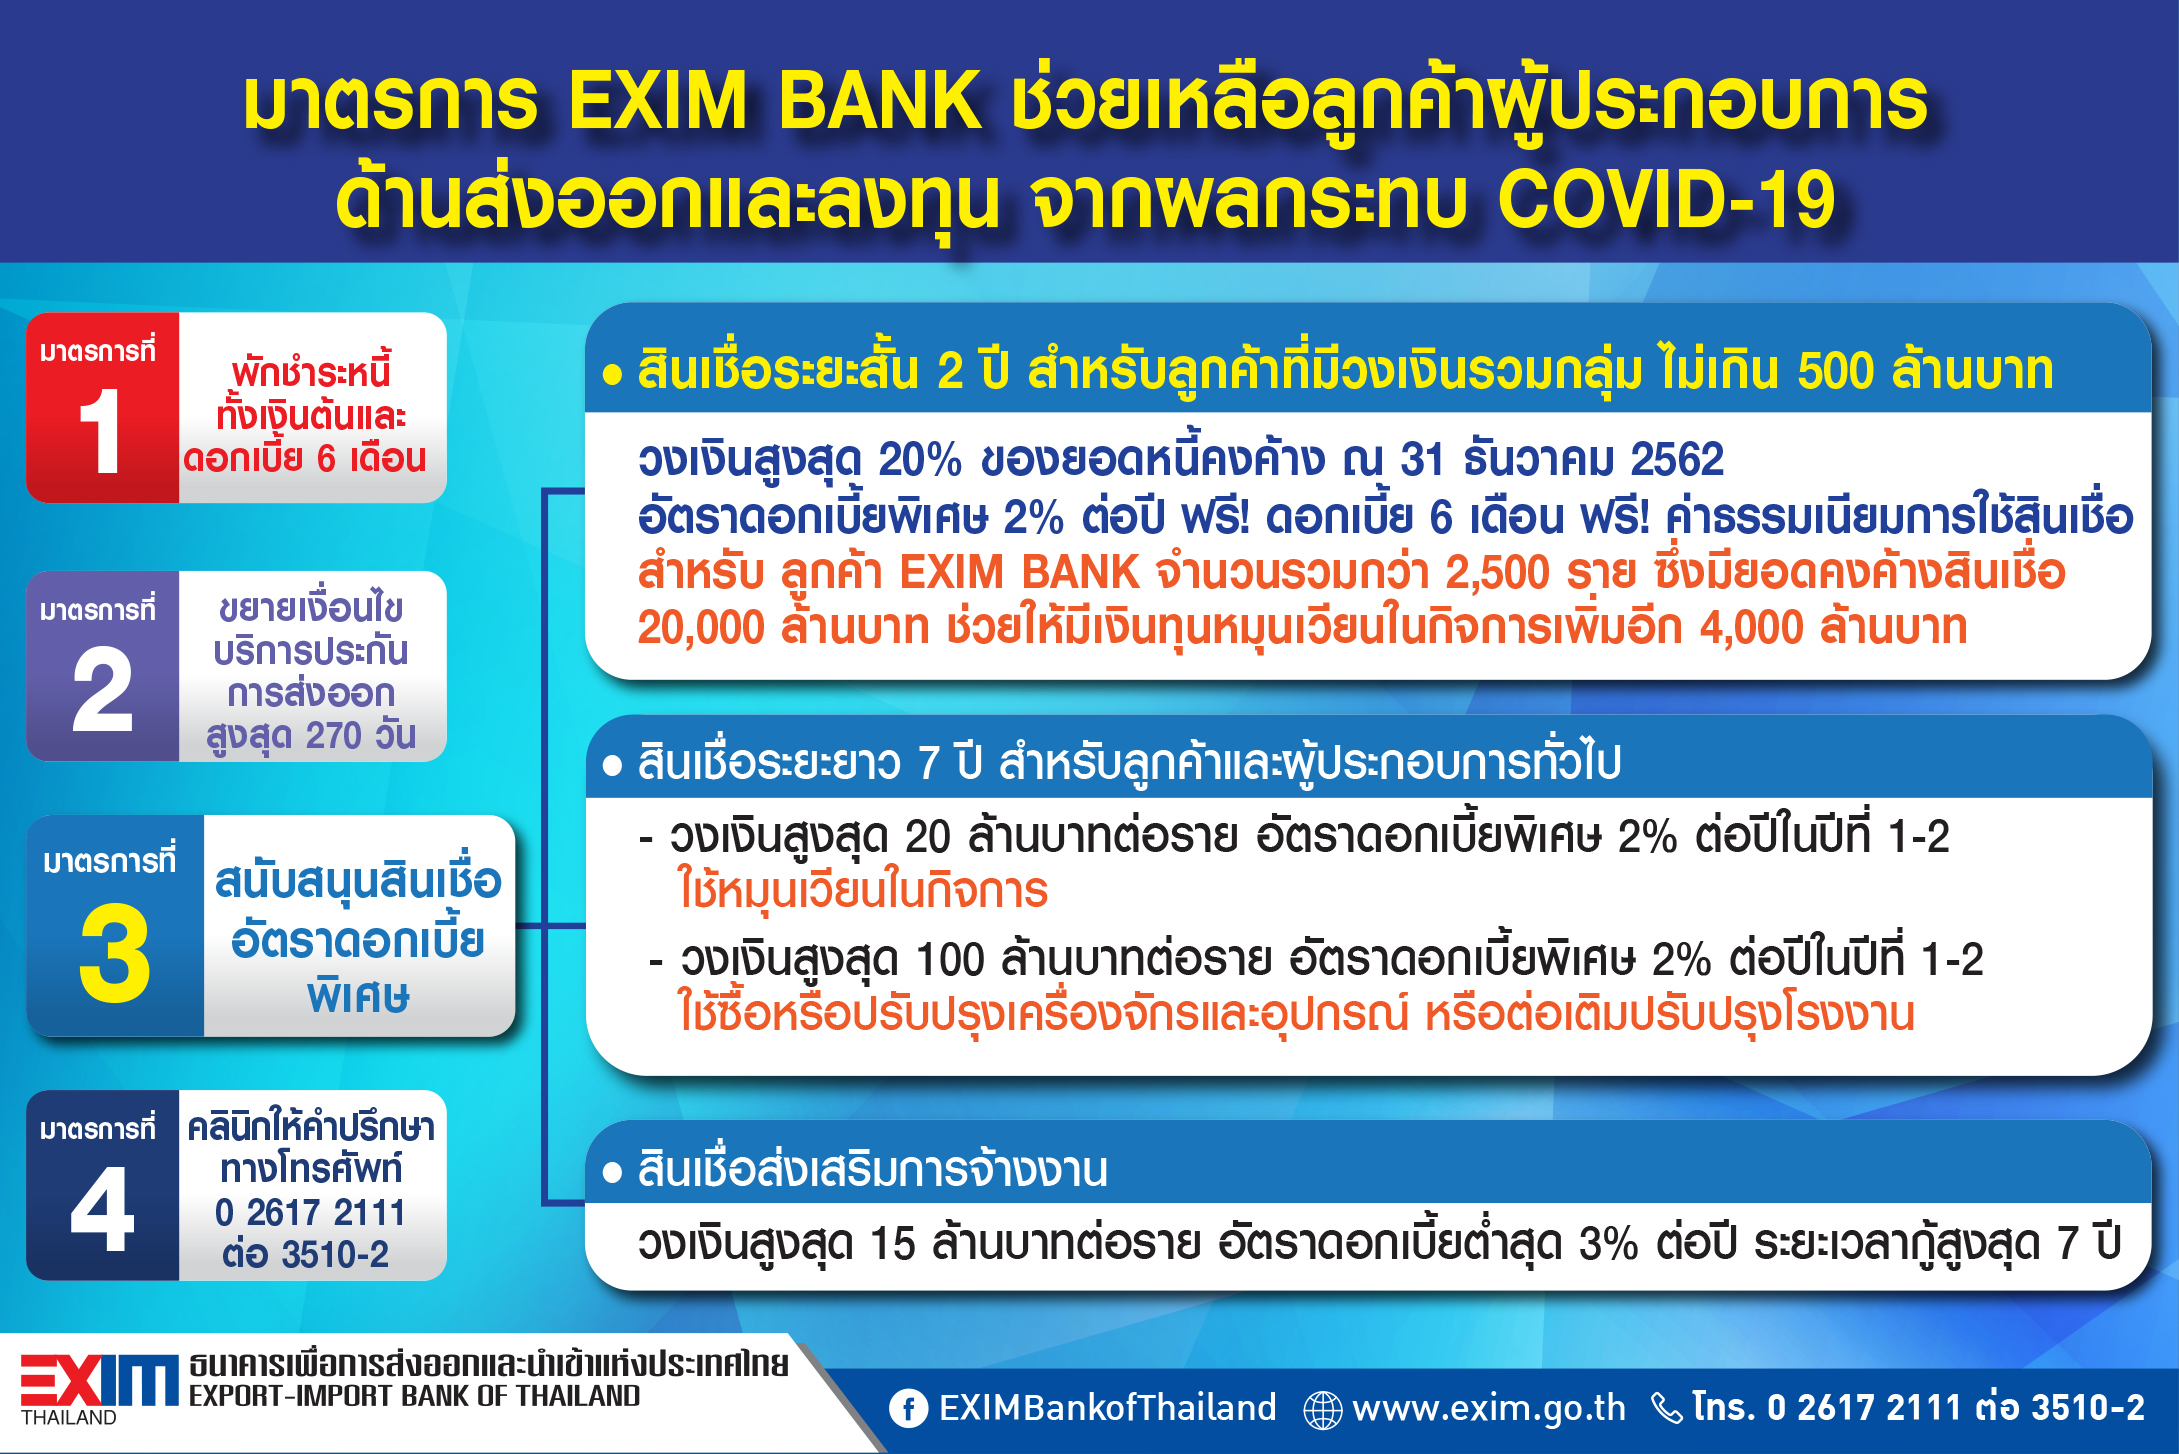 EXIM BANK เตรียมขยายสินเชื่อดอกเบี้ยต่ำ 2% ขานรับนโยบาย ธปท. เยียวยาผลกระทบโควิด-19 สำหรับลูกค้า SMEs วงเงินสินเชื่อไม่เกิน 500 ล้านบาท